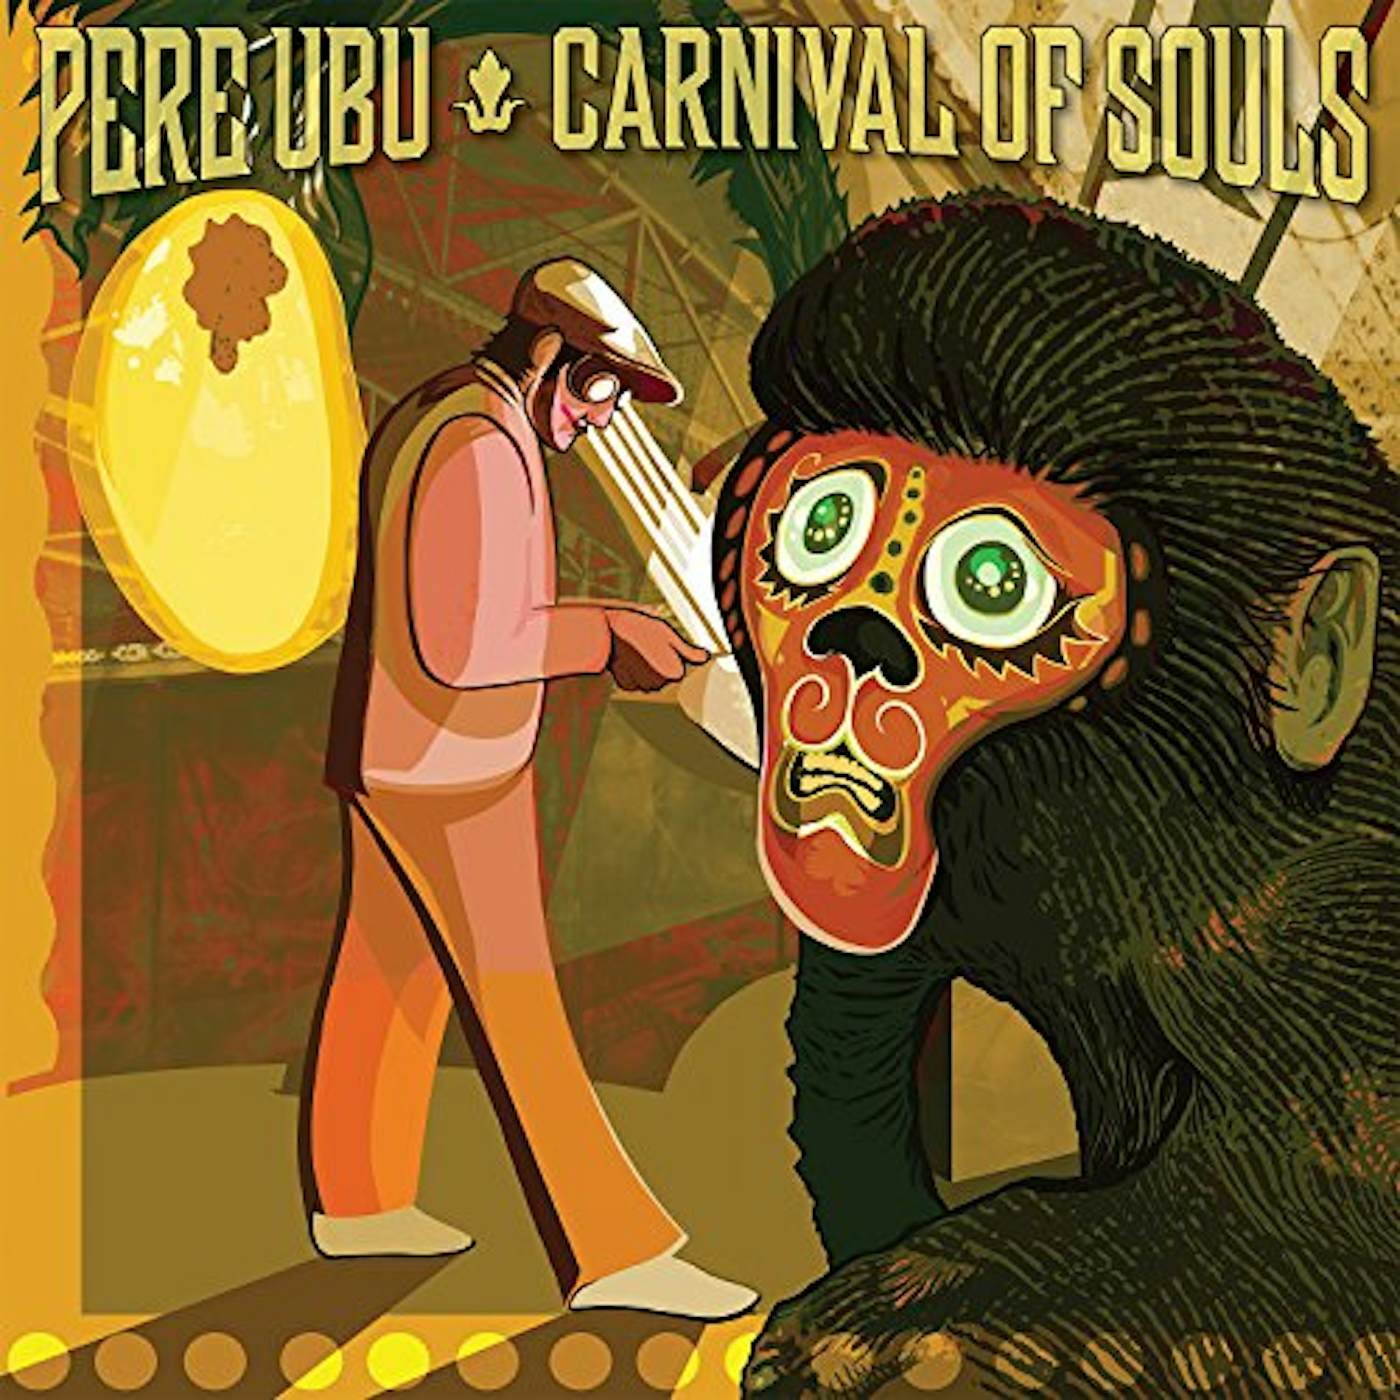 Pere Ubu Carnival of Souls Vinyl Record